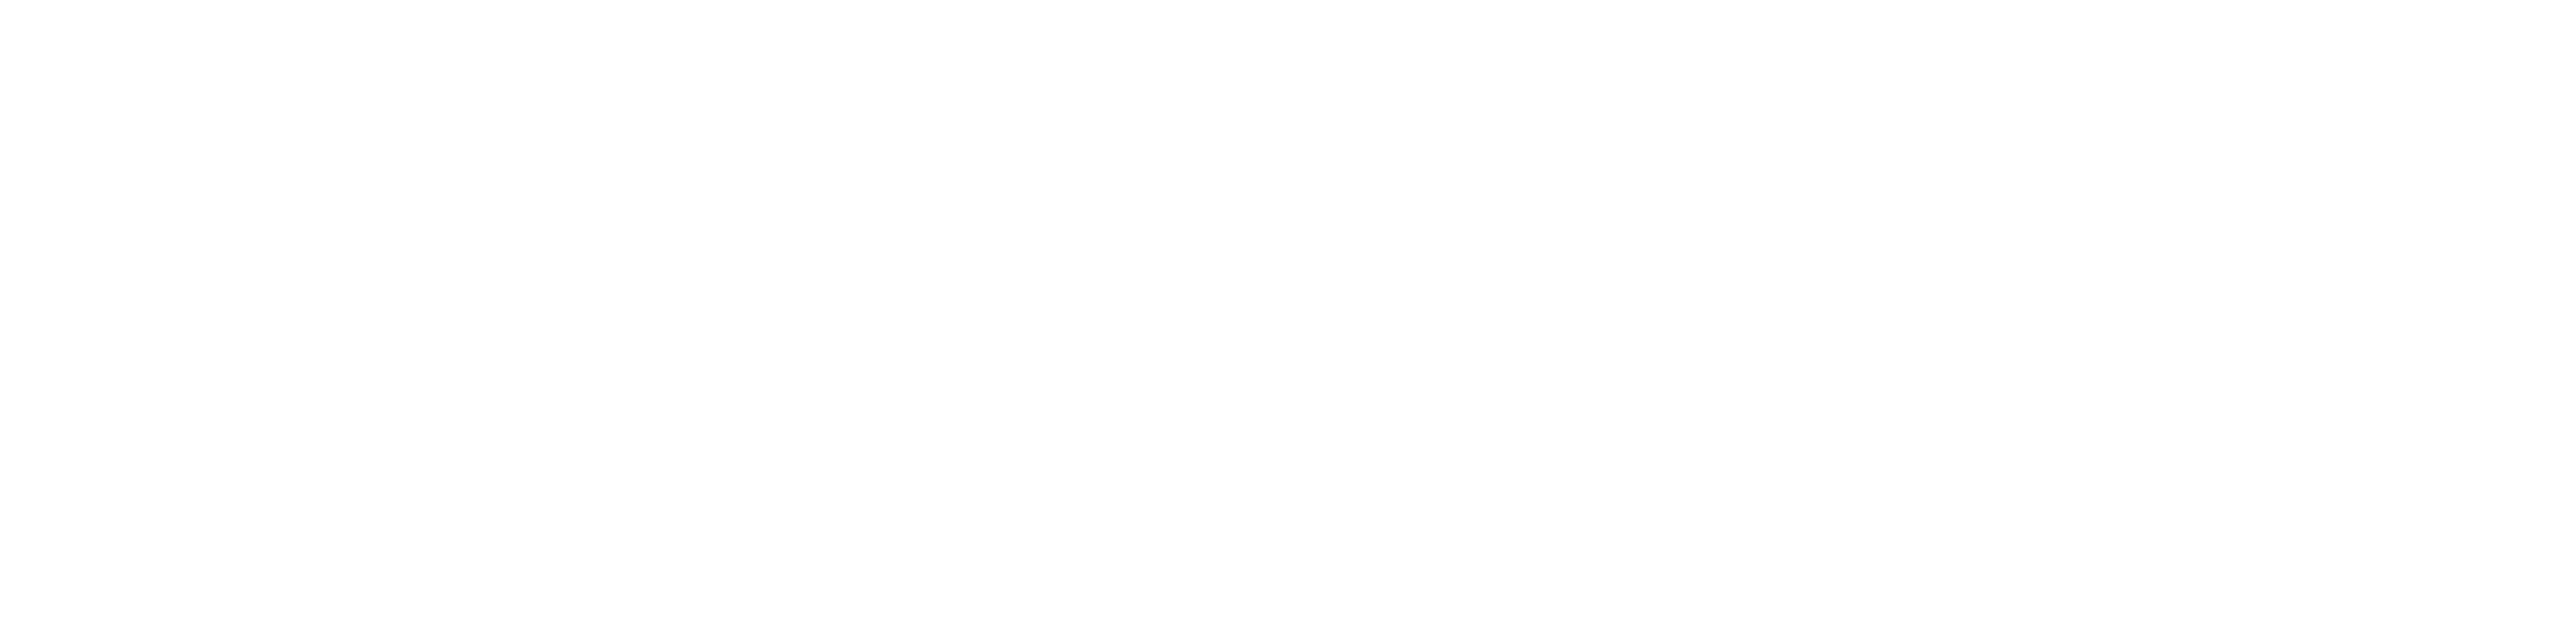 Smoothwall logo